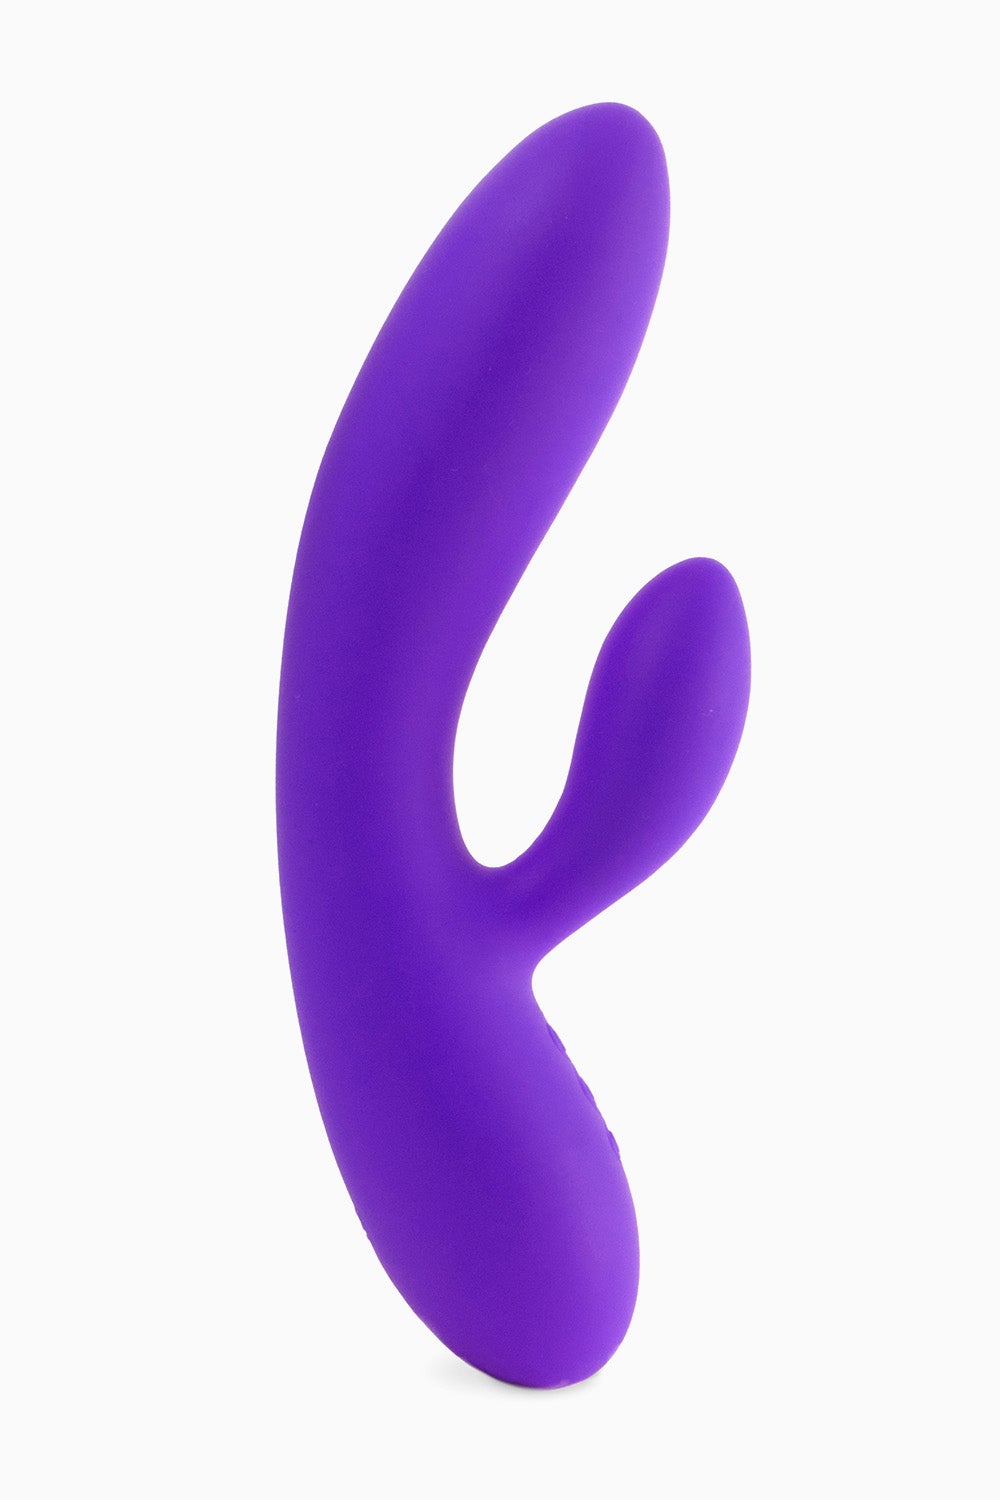 FeelzToys Lea Rabbit Vibrator, 9 Inch, Purple